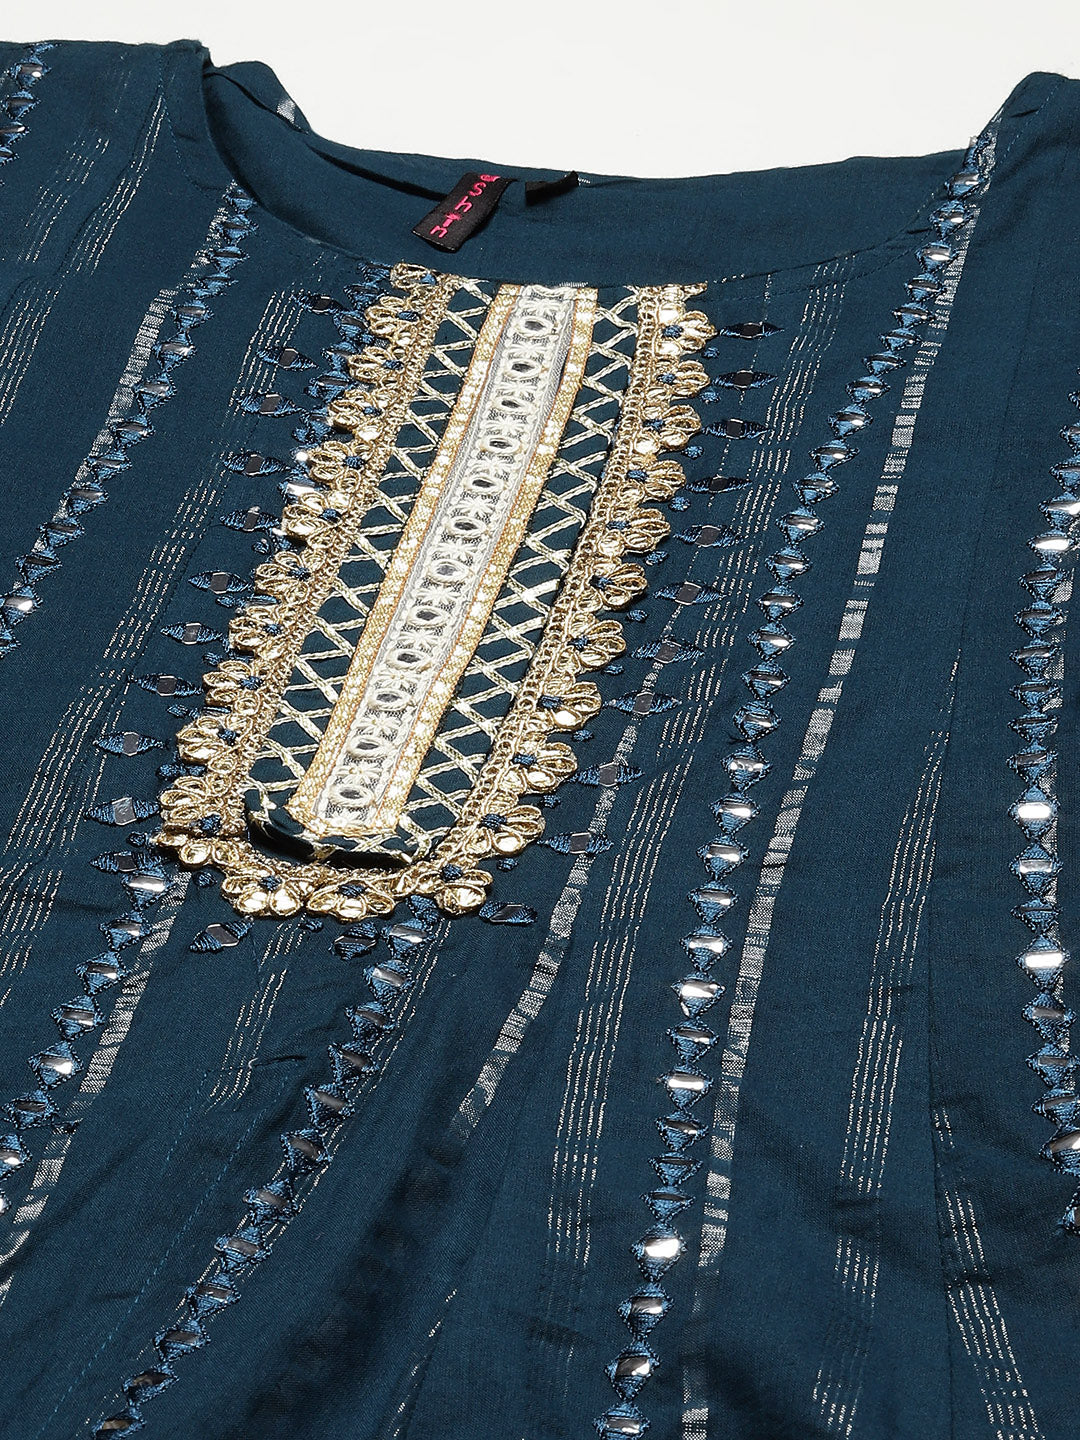 Ishin Women's Cotton Blend Teal Embroidered Anarkali Kurta Sharara Dupatta Set